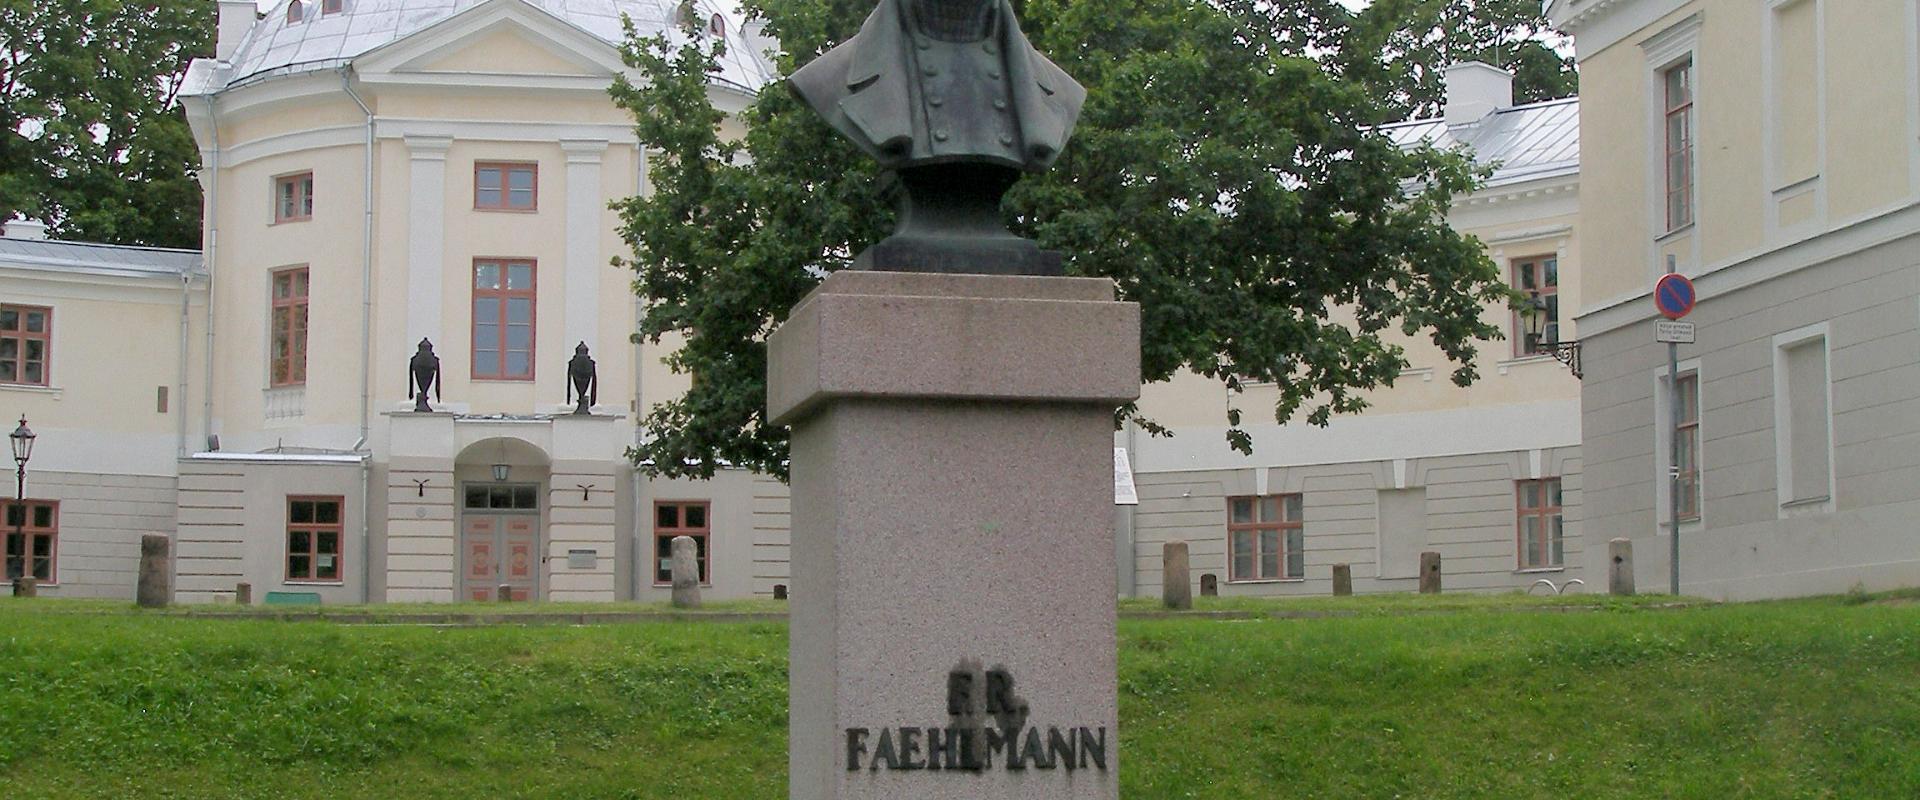 Fr. R. Faehlmannin monumentti